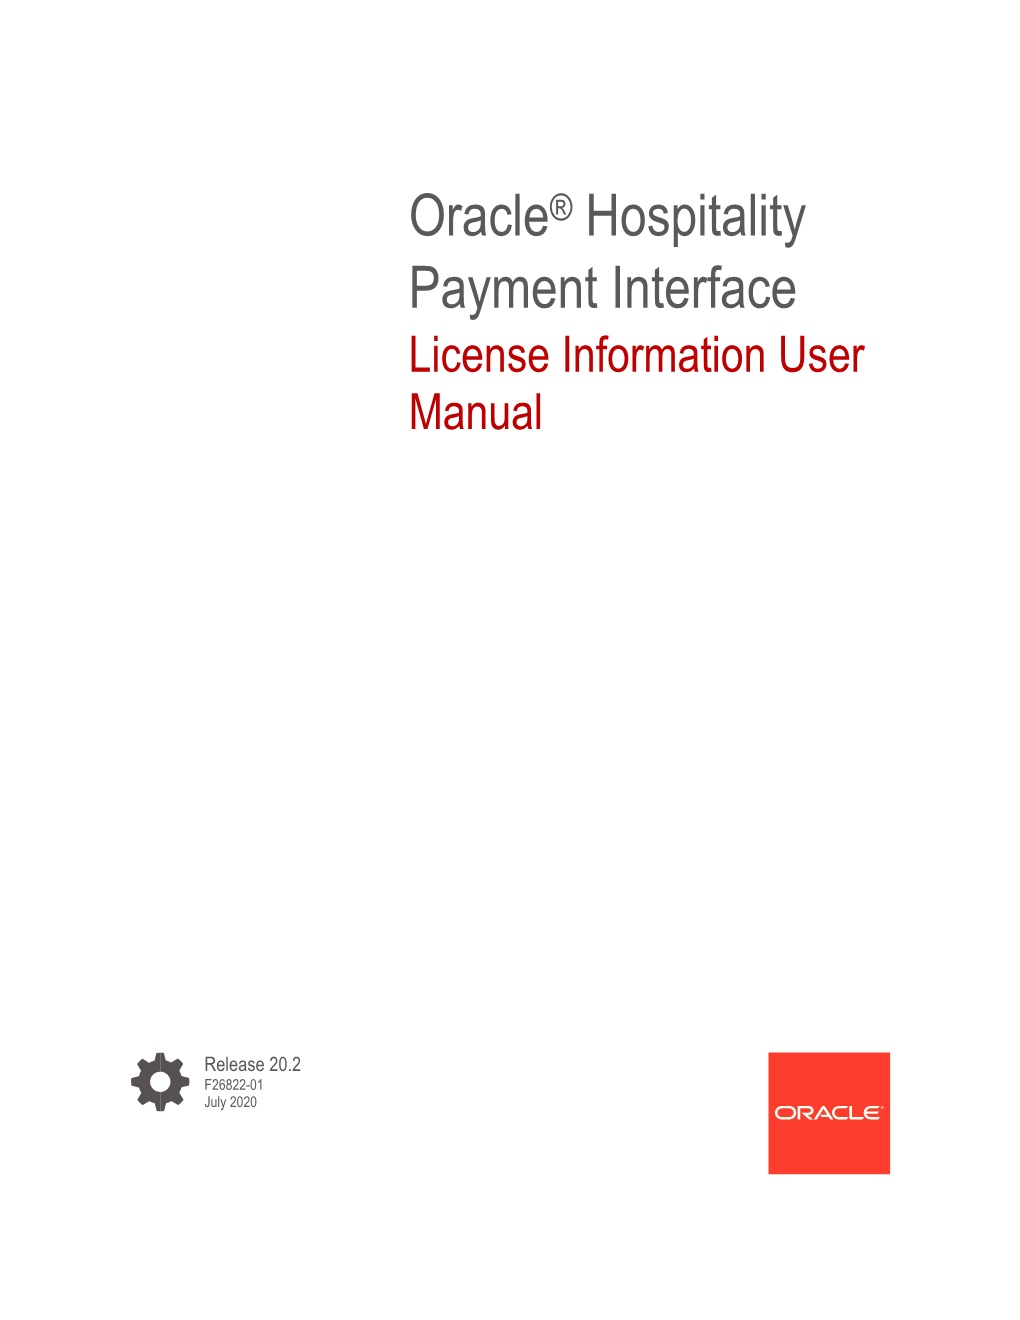 Licensing Information User Manual